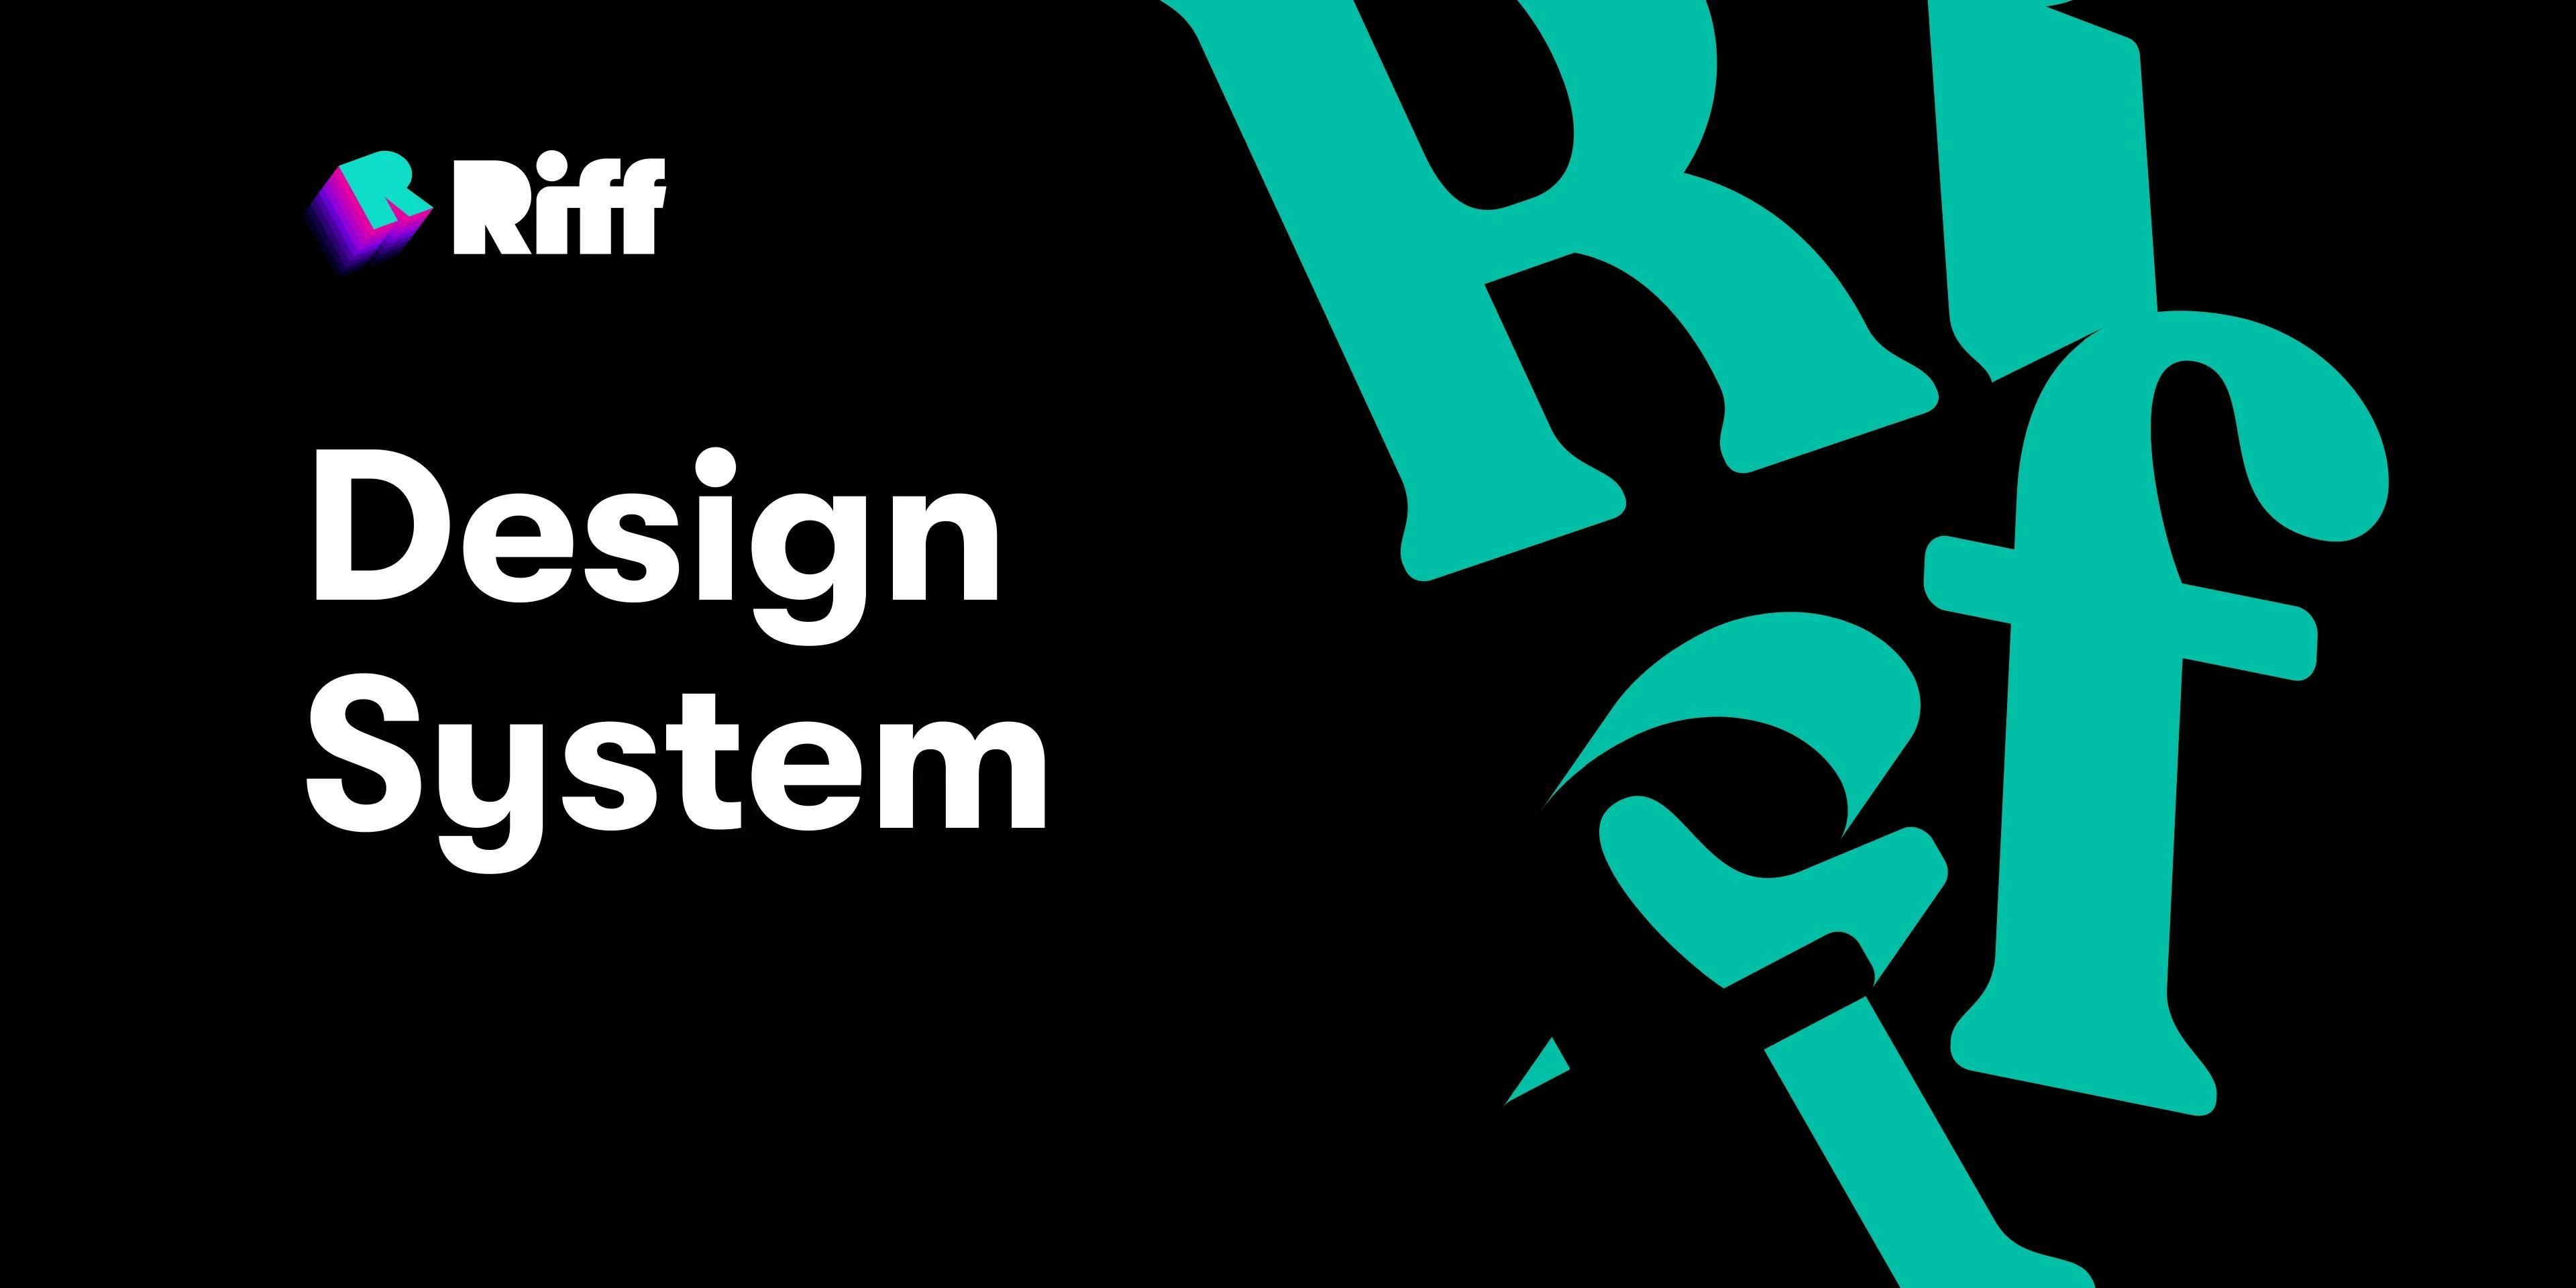 Riff Design System